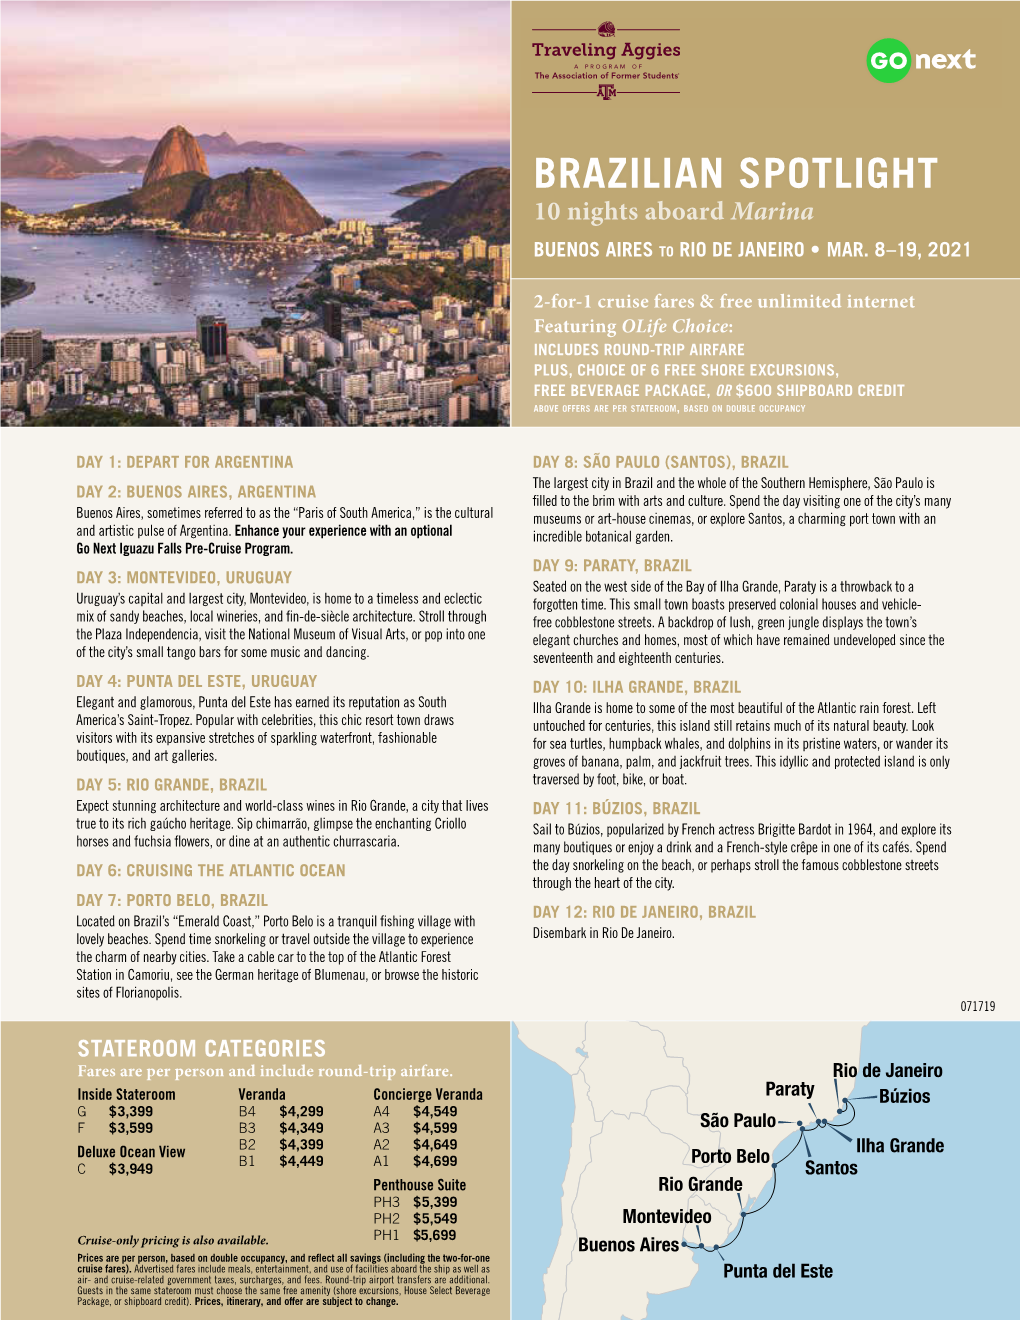 BRAZILIAN SPOTLIGHT 10 Nights Aboard Marina